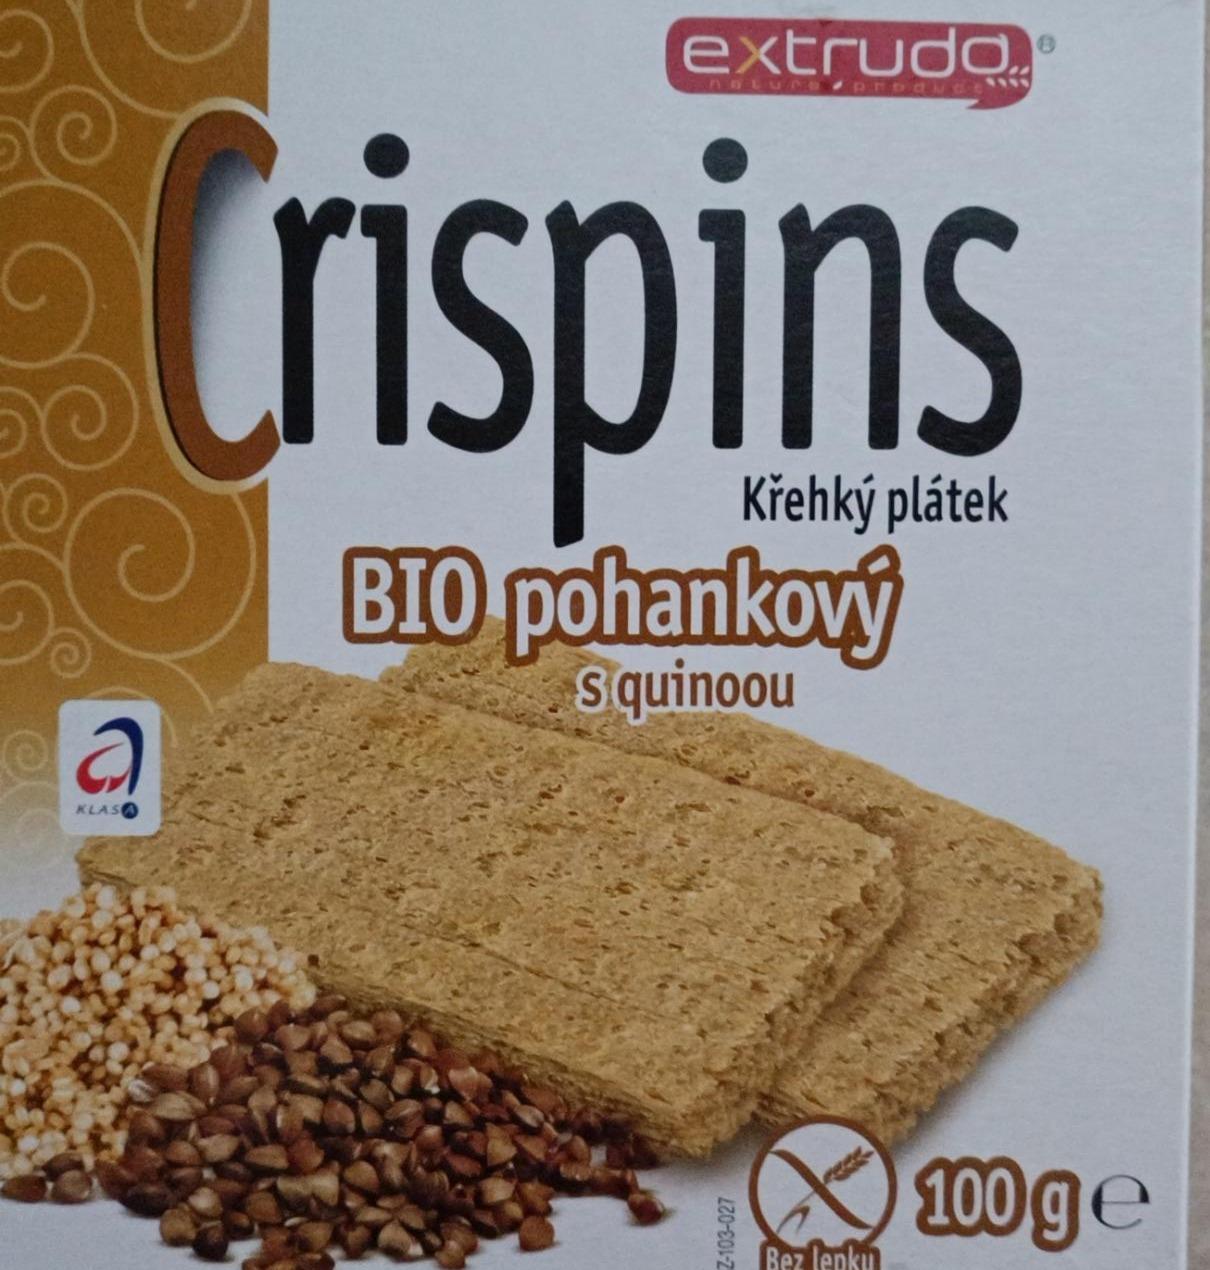 Fotografie - Crispins BIO pohankový plátek s quinoou Extrudo